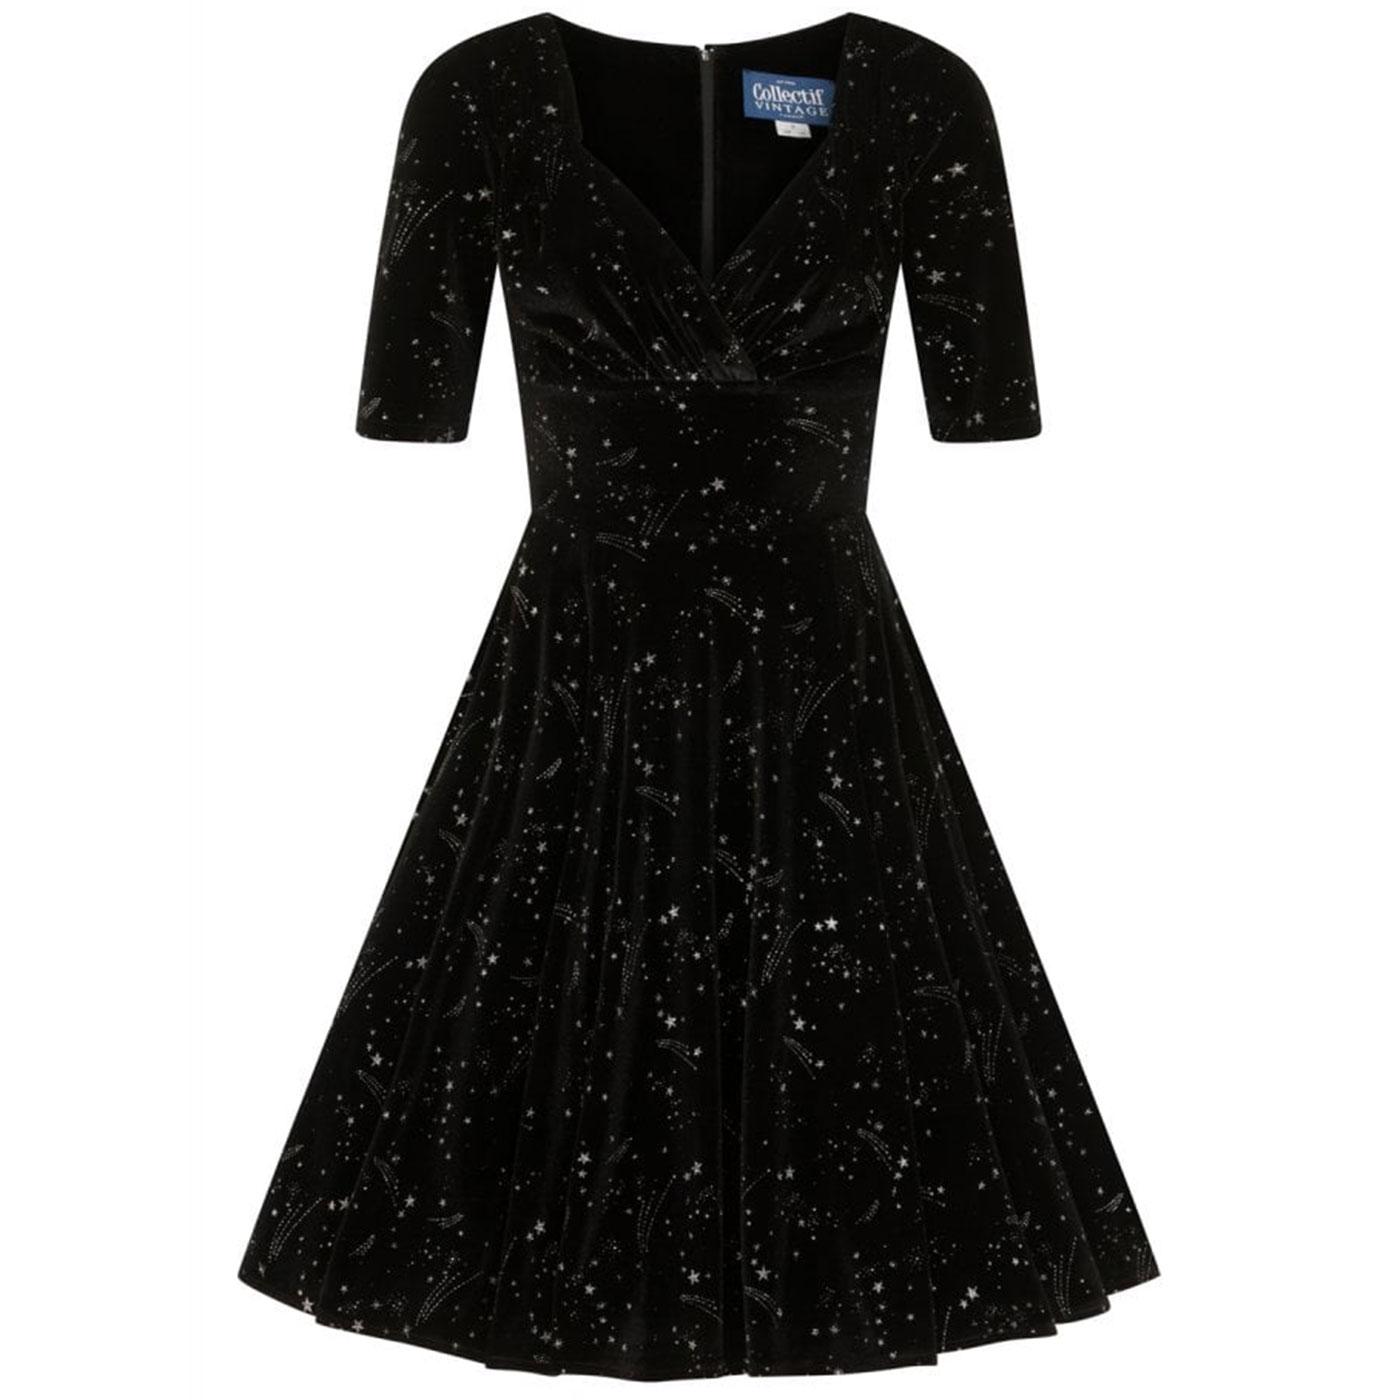 Trixie COLLECTIF 40s Velvet Make A Wish Dress 